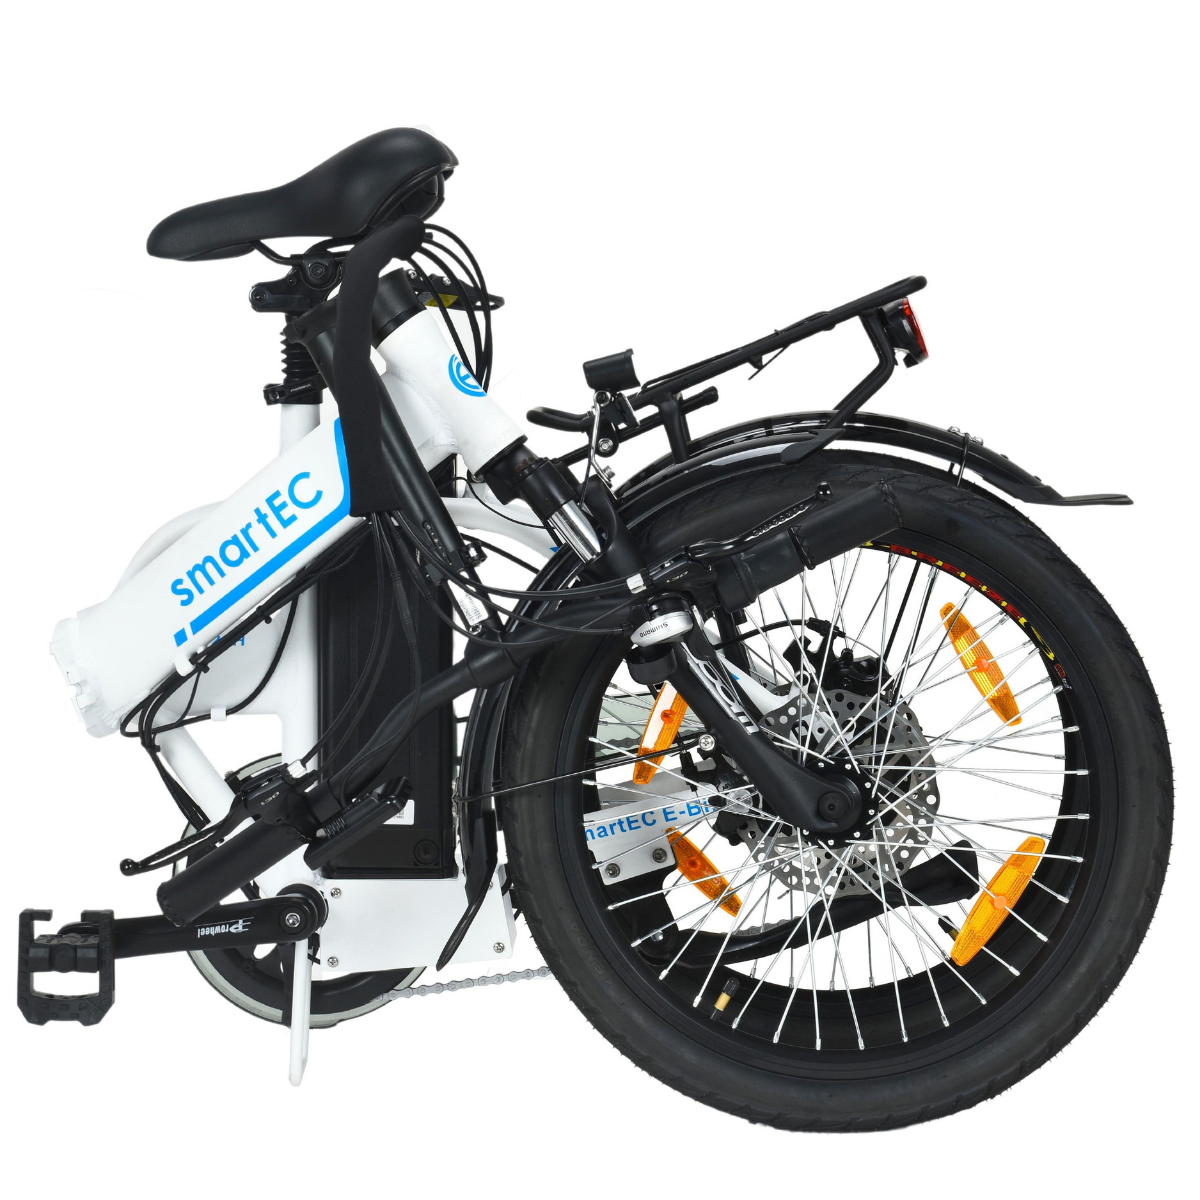 SMARTEC Camp-20H Falt Pedelec/E-Bike Kompakt-/Faltrad Unisex-Rad, 20 cm, Rahmenhöhe: 562 (Laufradgröße: Zoll, 42 weiß) Wh